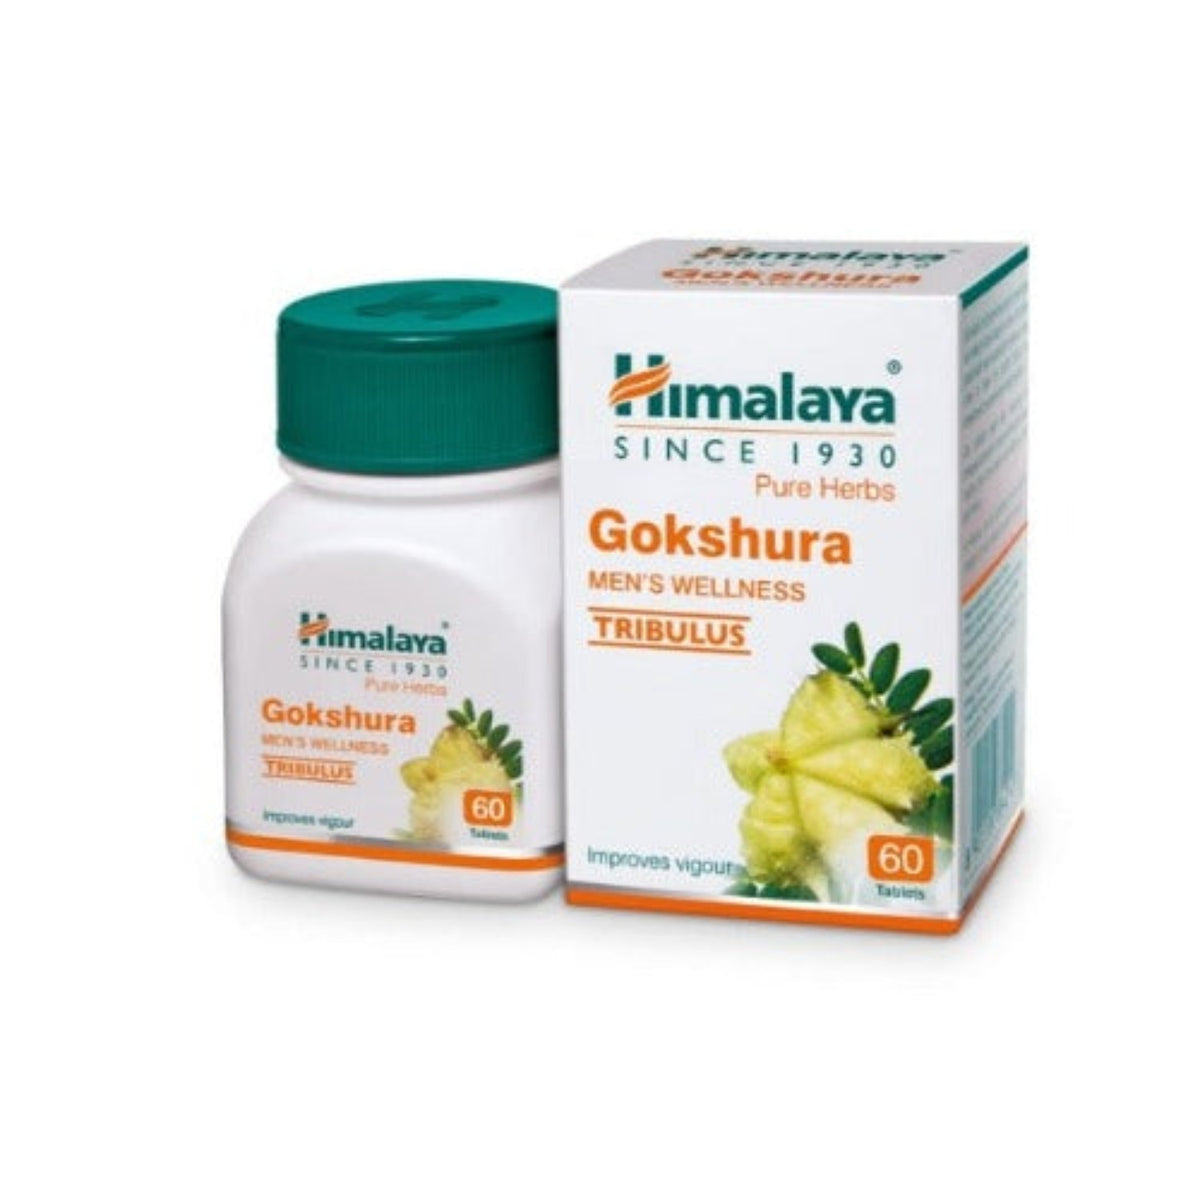 Himalaya Pure Herbs Kräuter-Ayurvedische Gokshura Tribulus Männergesundheit Verbessert die Vitalität Tabletten